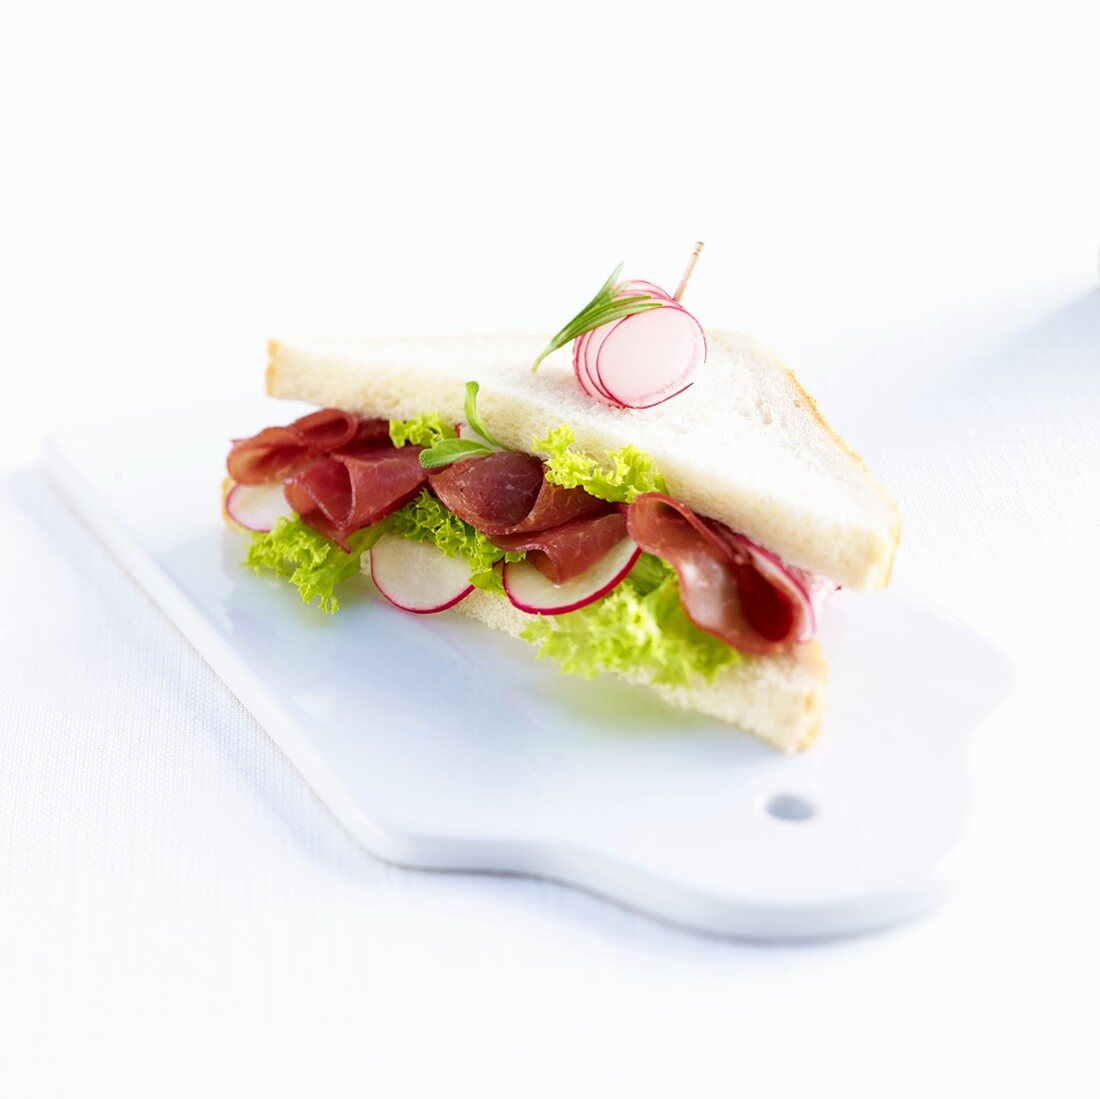 A ham, lettuce and radish sandwich